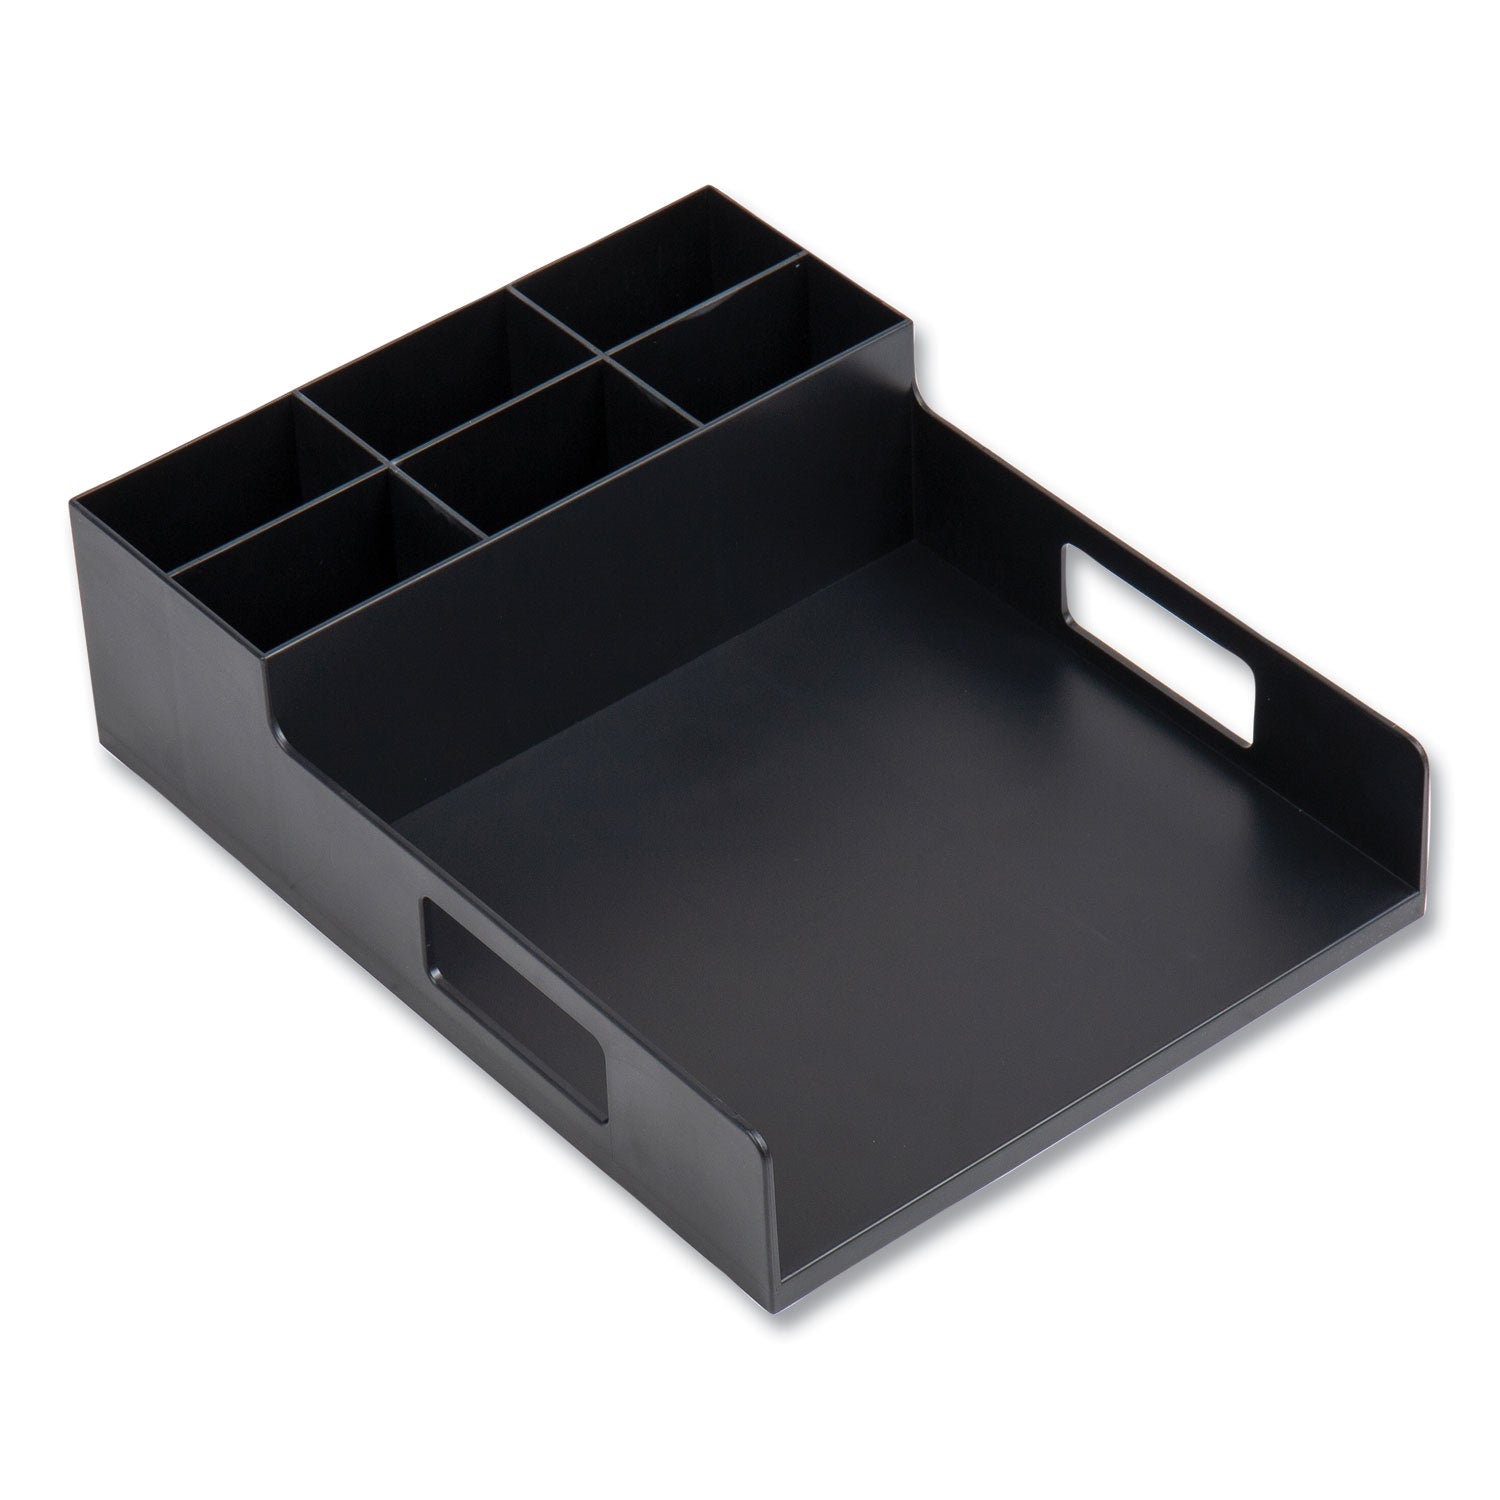 network-collection-utensil-napkin-and-plate-countertop-organizer-152-x-115-x-445-plastic-black_emspsnaputblk - 1